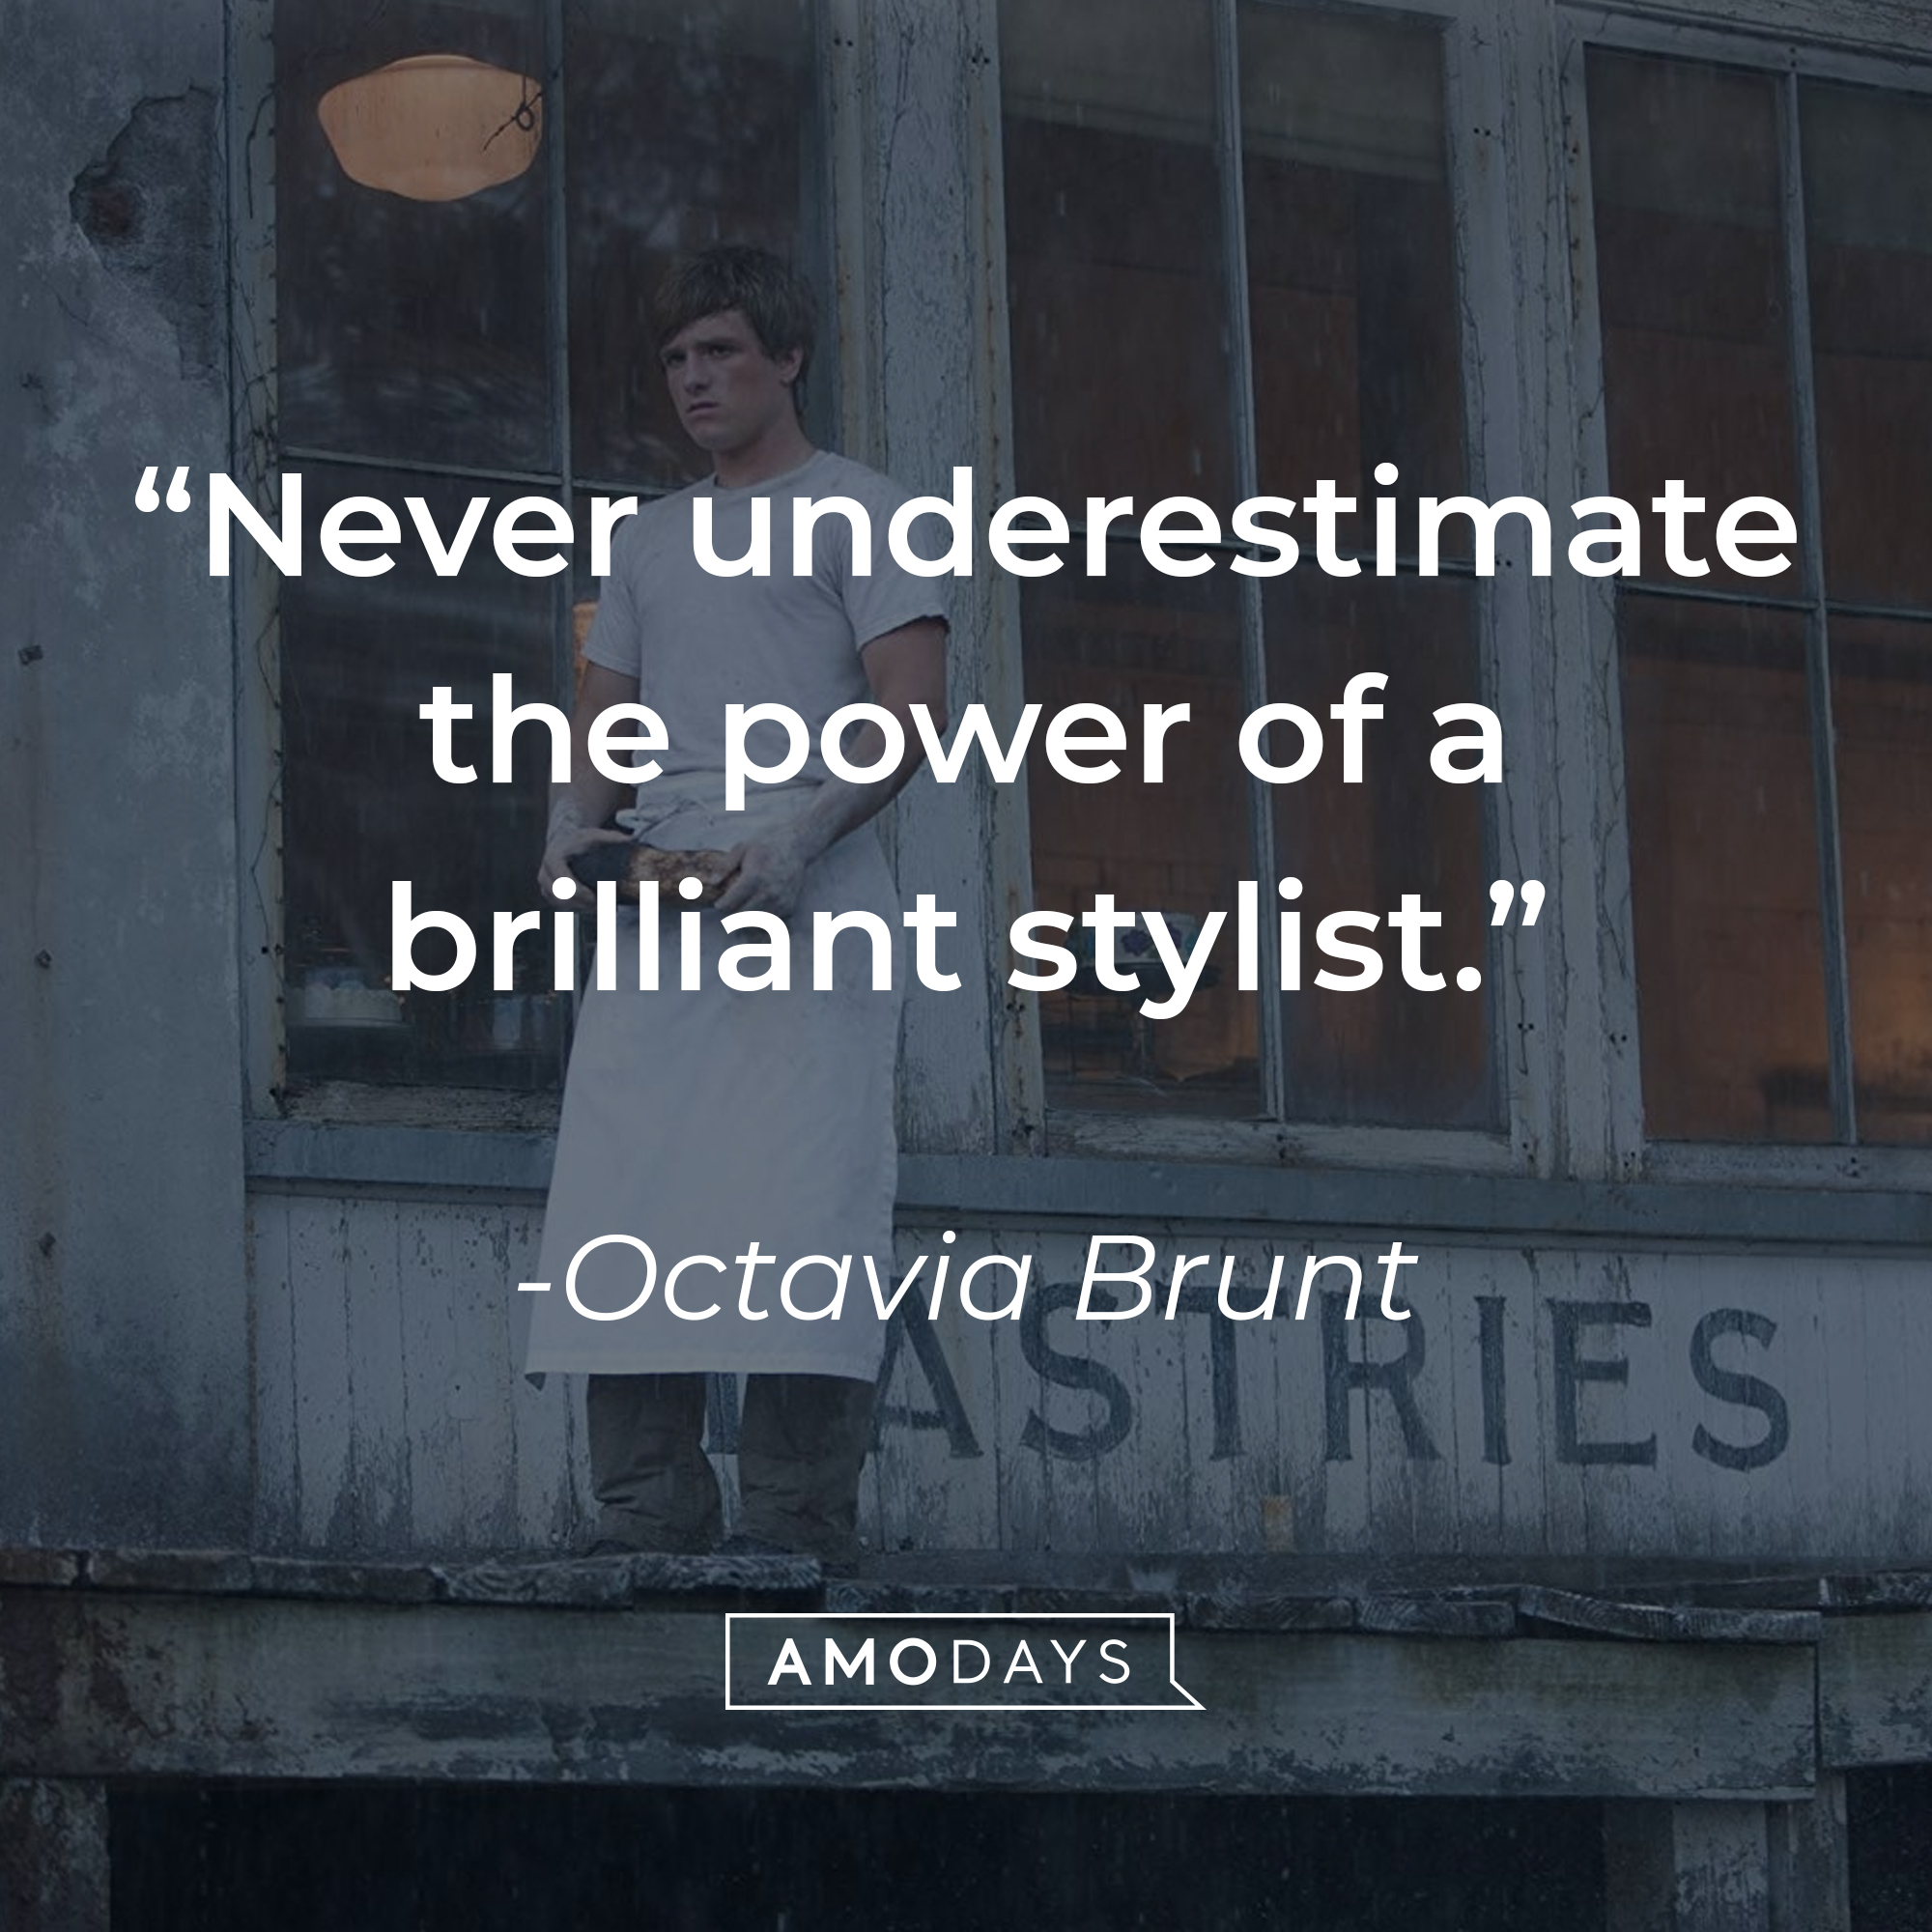 Peeta's quote: “Never underestimate the power of a brilliant stylist.” | Source: facebook.com/TheHungerGamesMovie